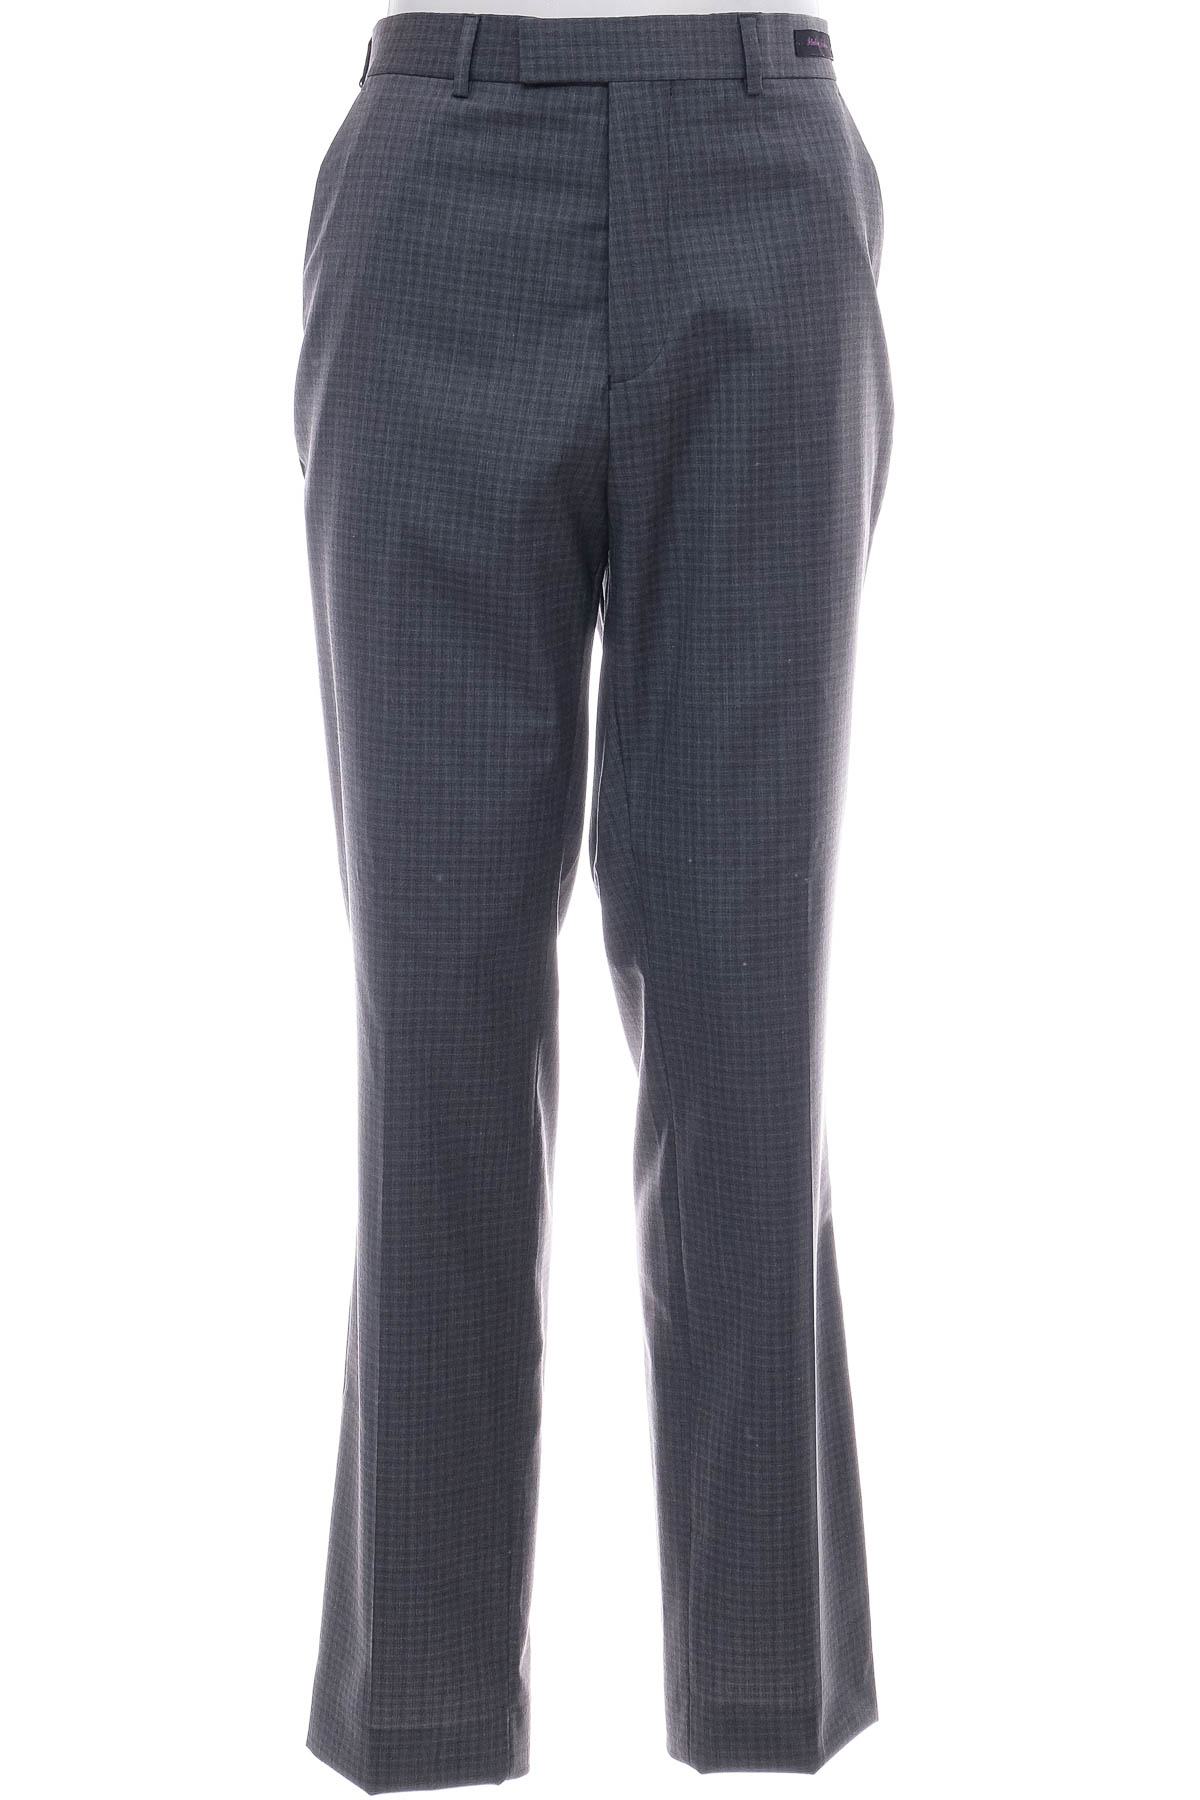 Pantalon pentru bărbați - TED BAKER - 0